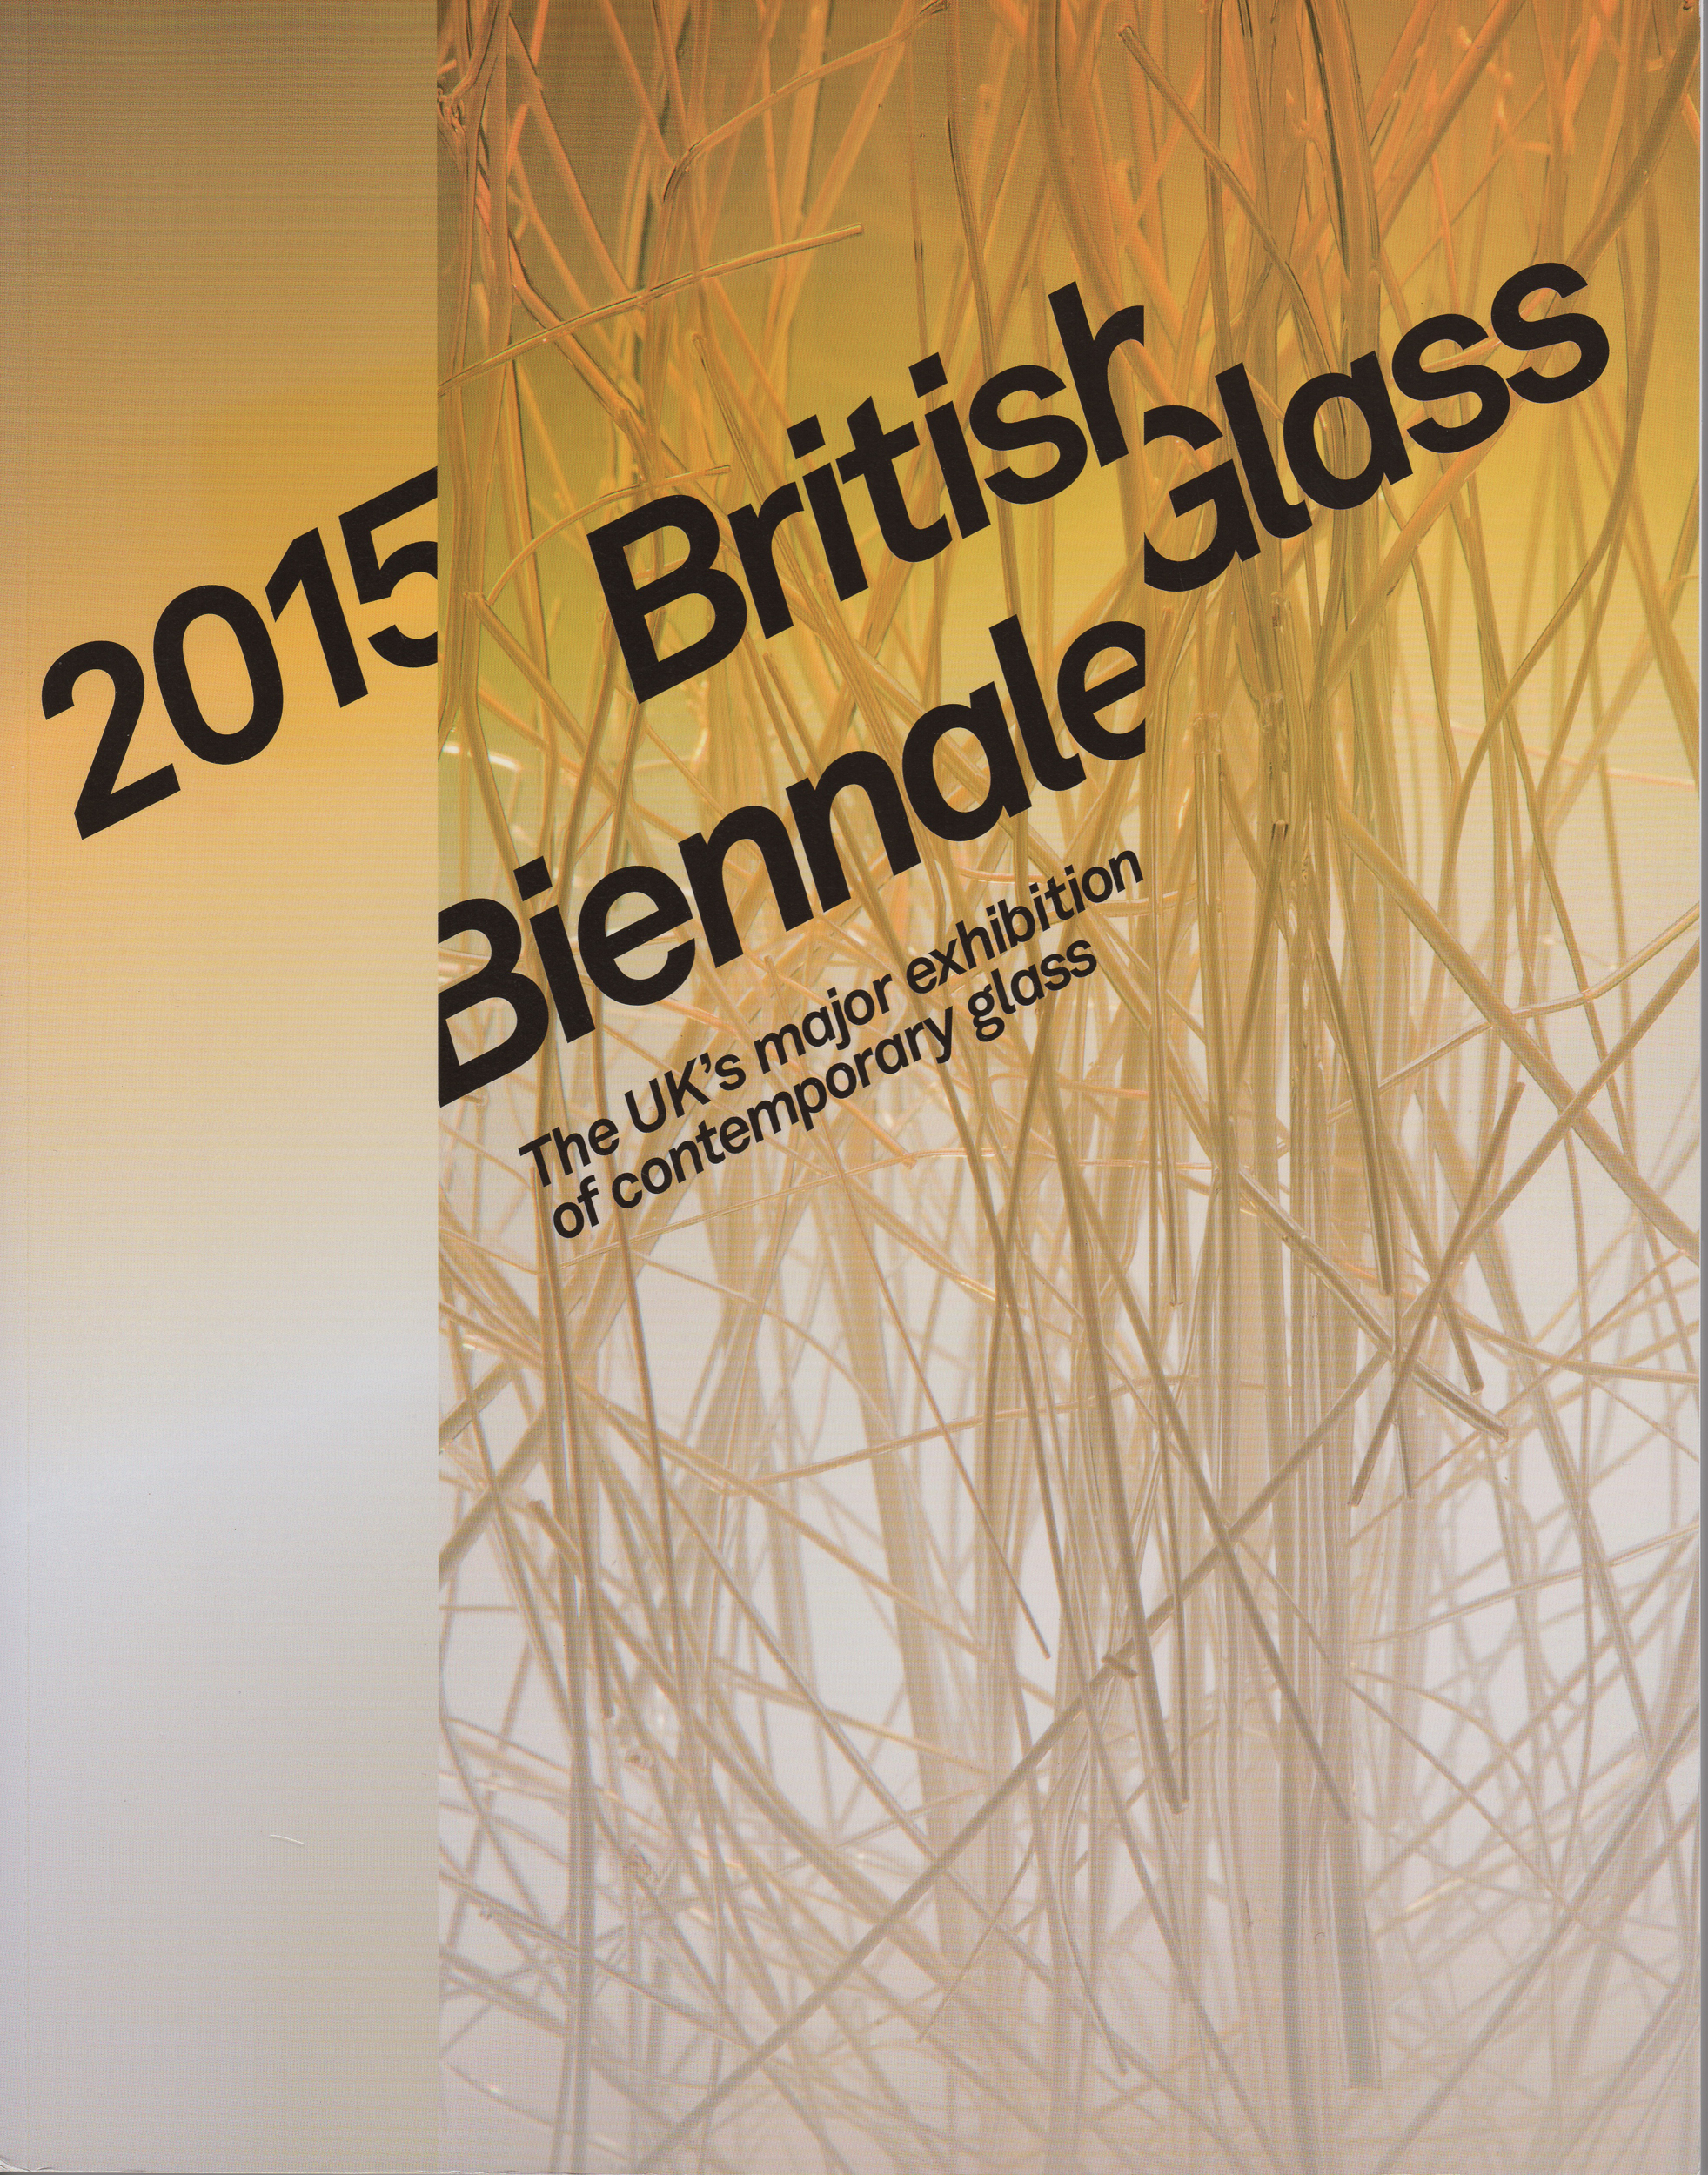 British Glass Biennale 2015.jpeg